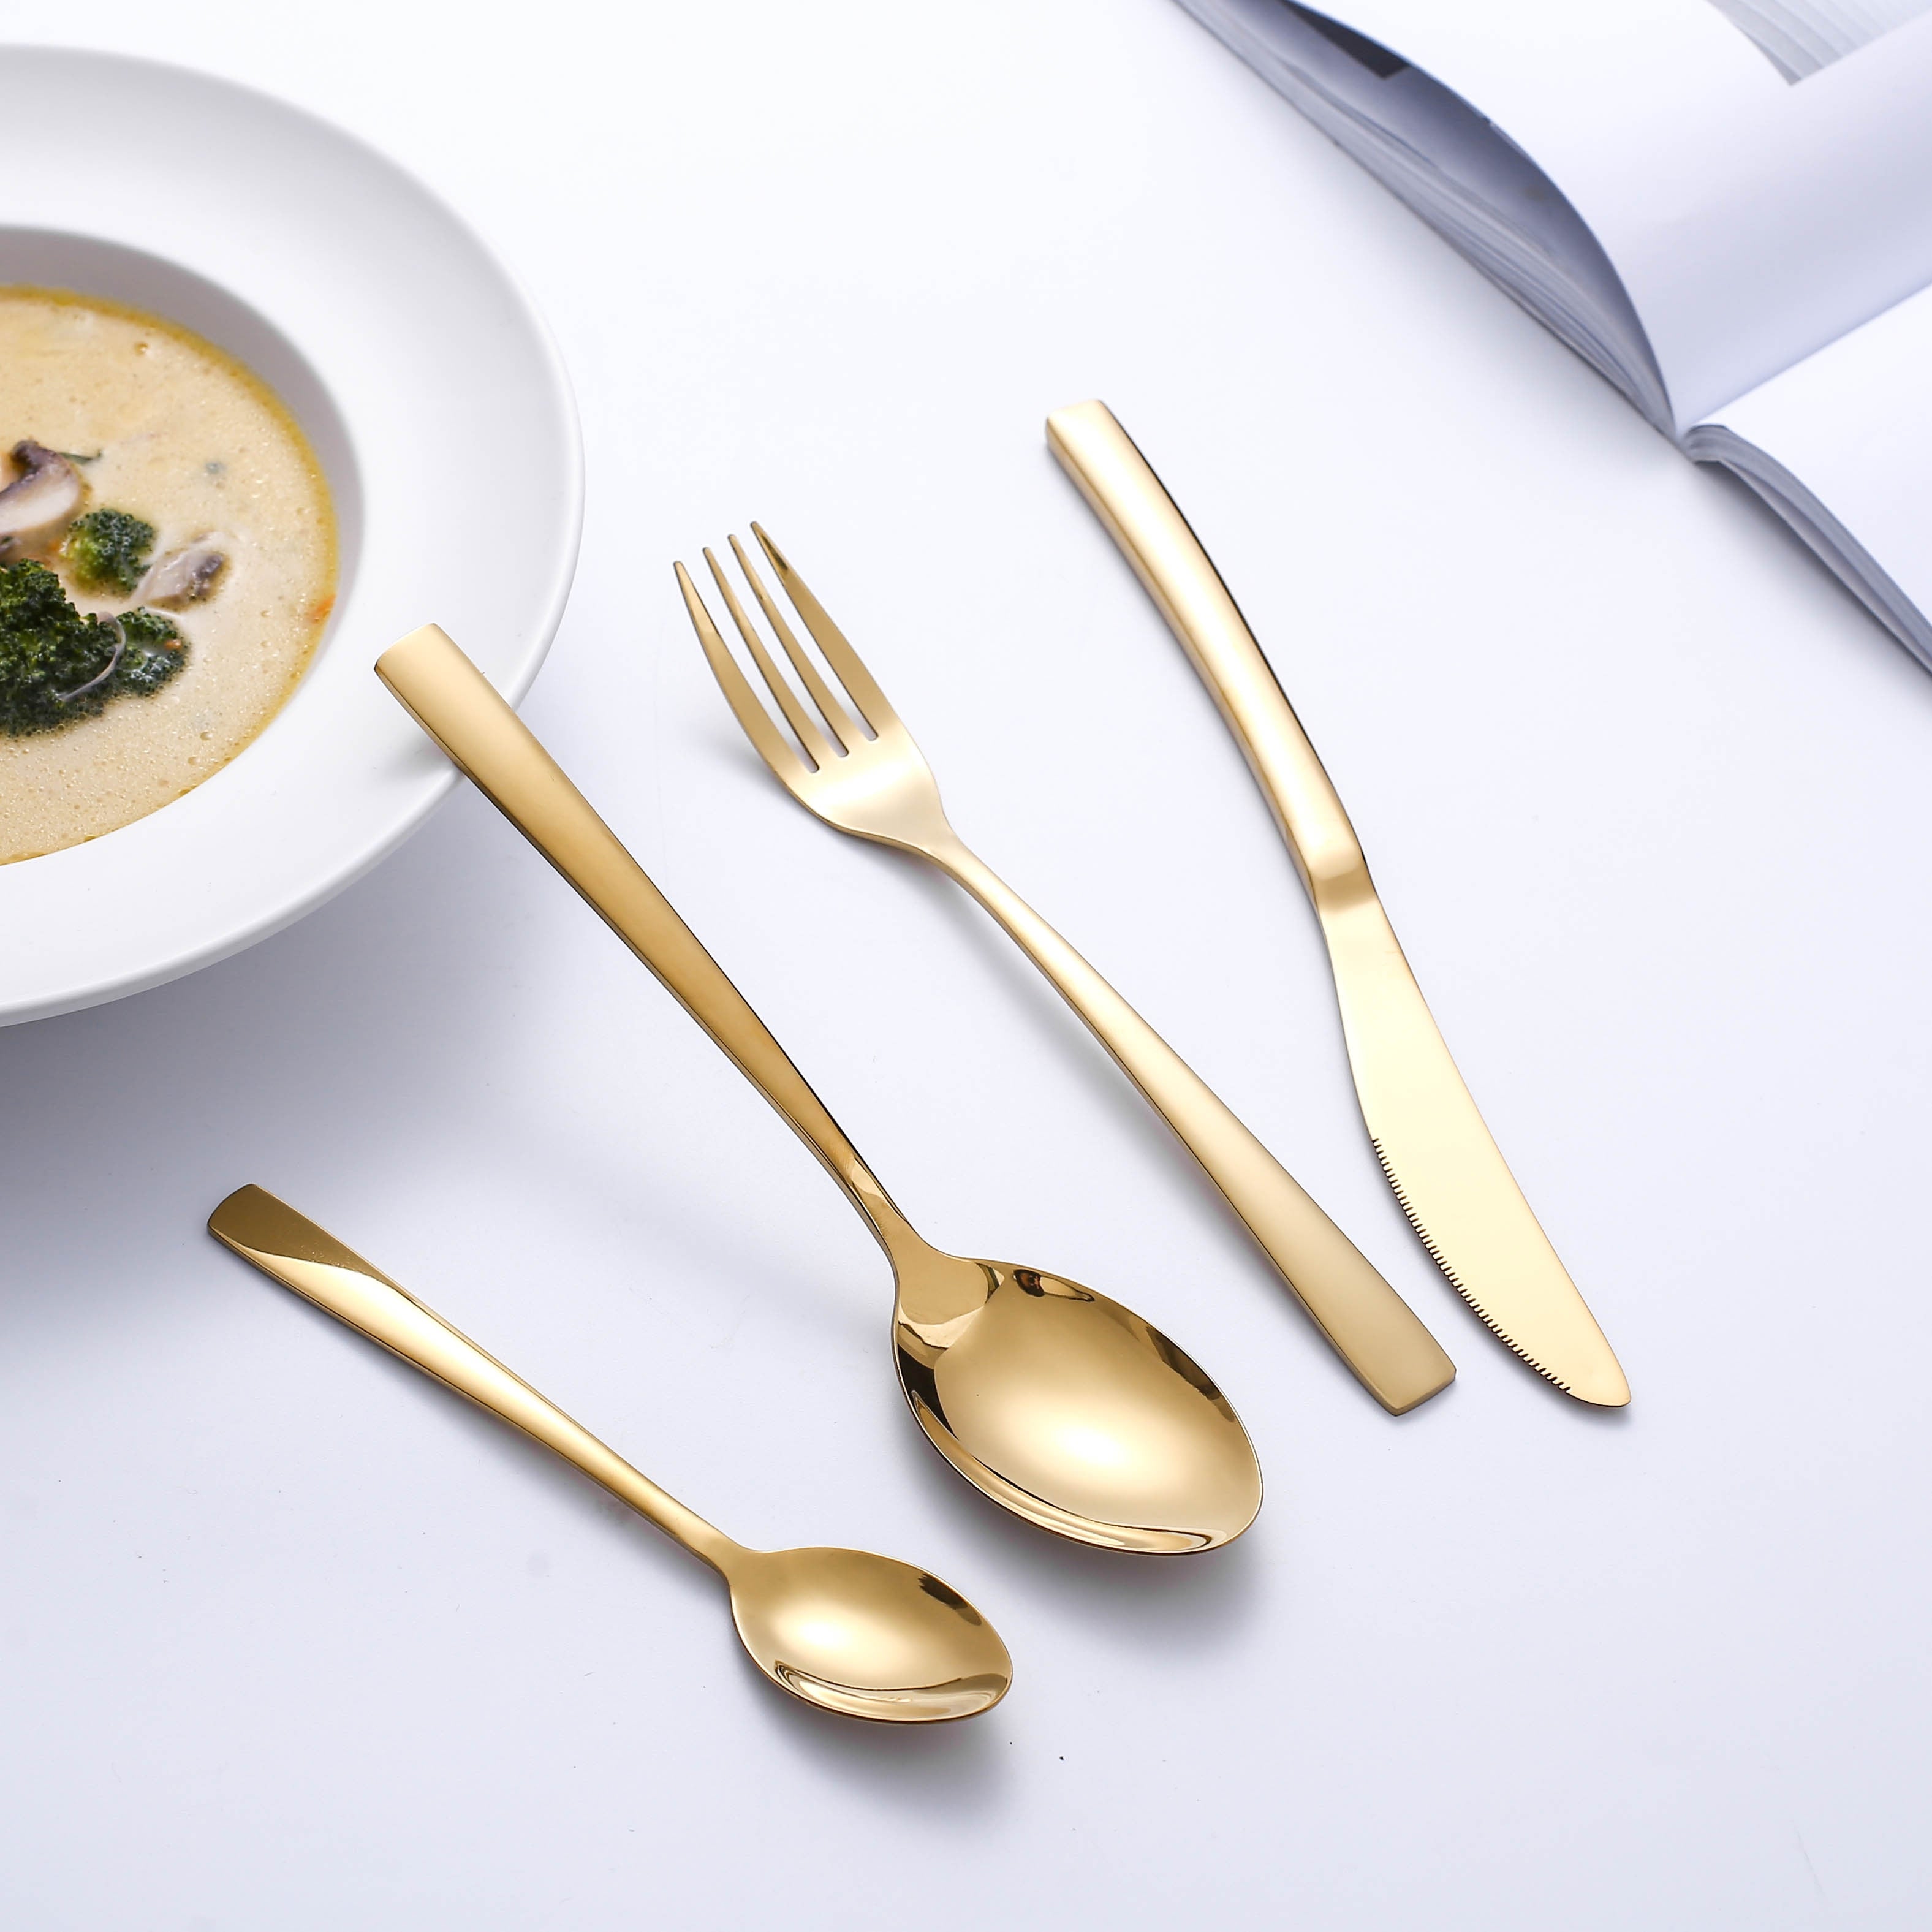 24pcs Tableware Cutlery Dinner Set